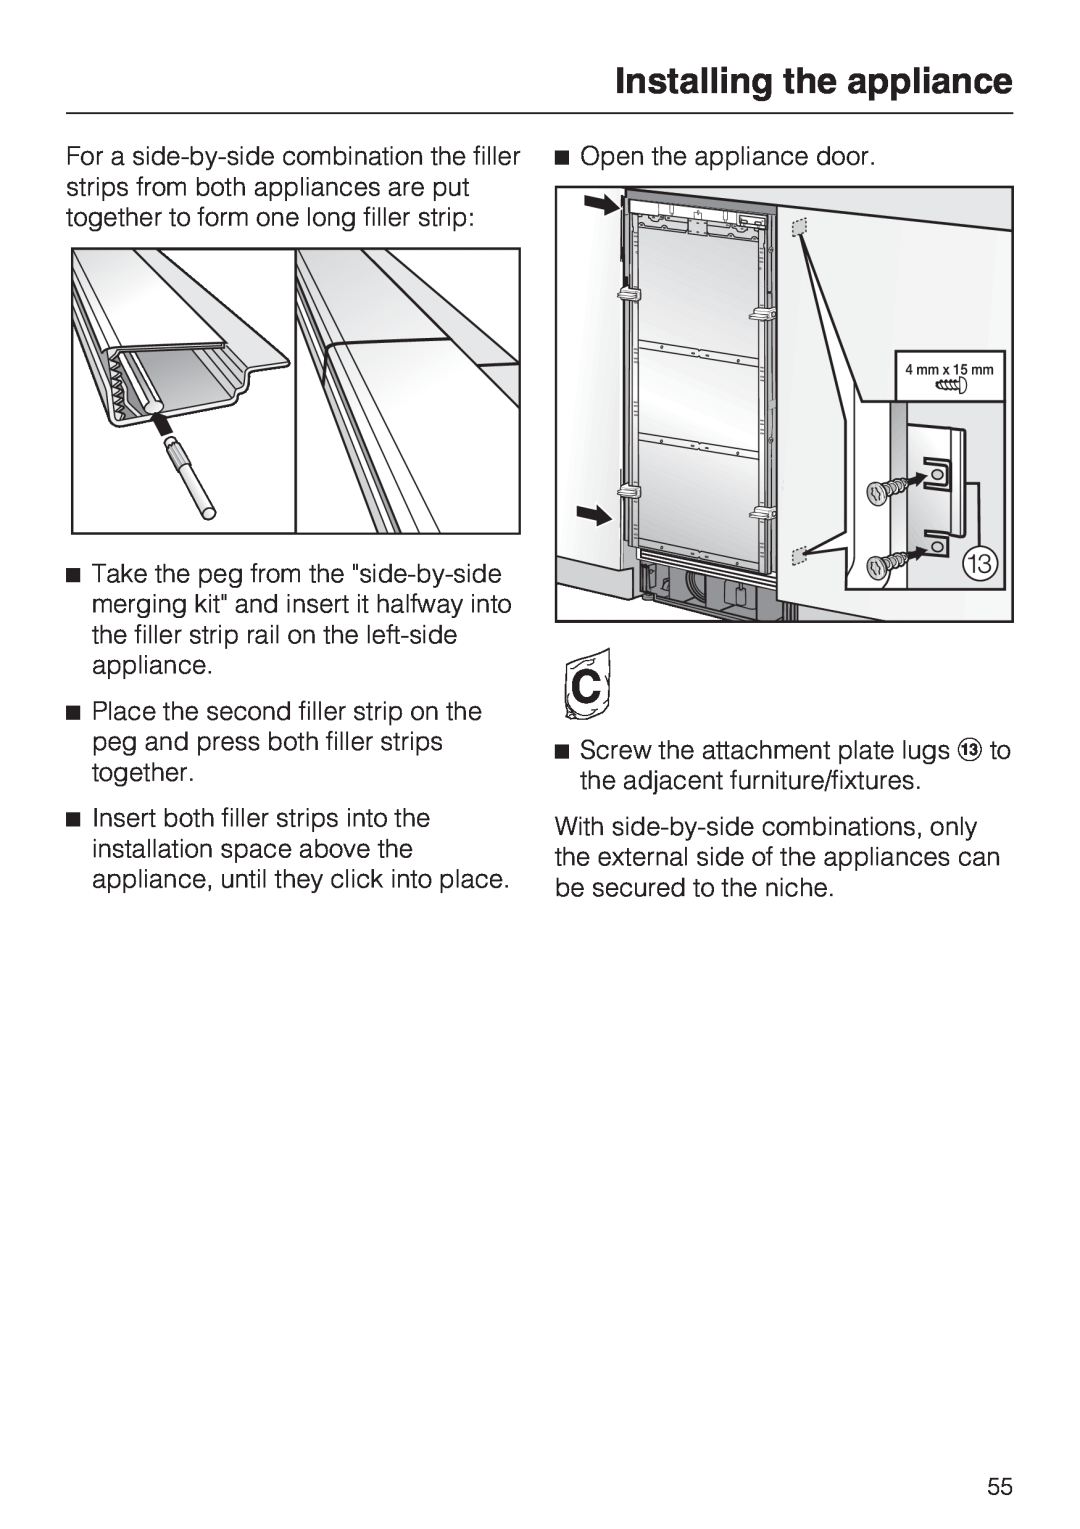 Miele K 1811 Vi, K 1911 Vi, K 1901 Vi, K 1801 Vi installation instructions Installing the appliance, Open the appliance door 